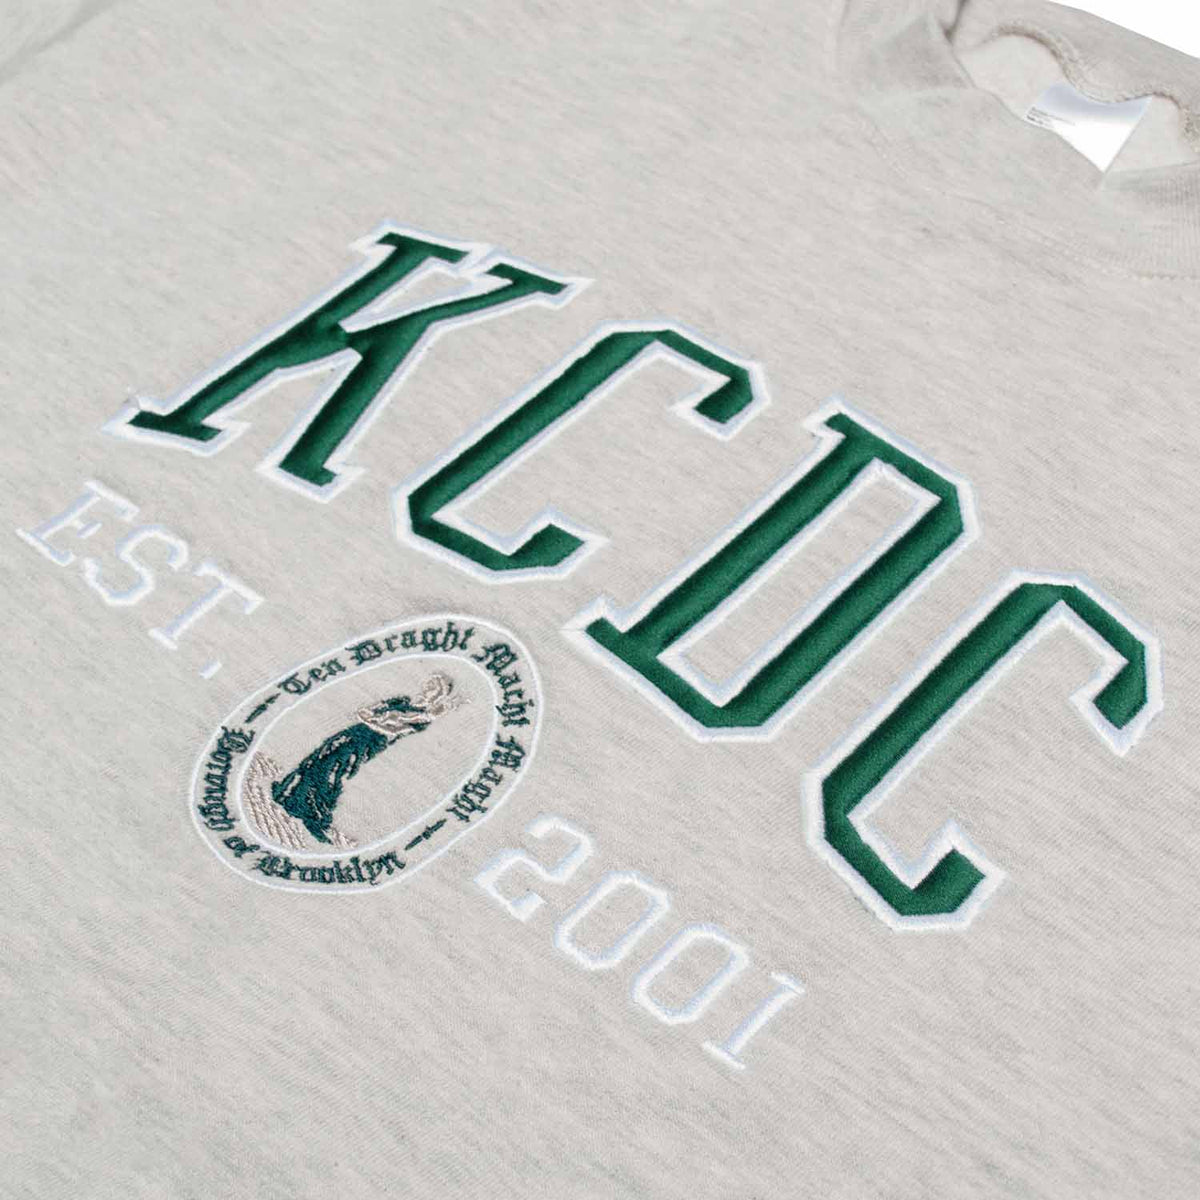 KCDC Varsity Midweight Crew Sweatshirt - Ecru